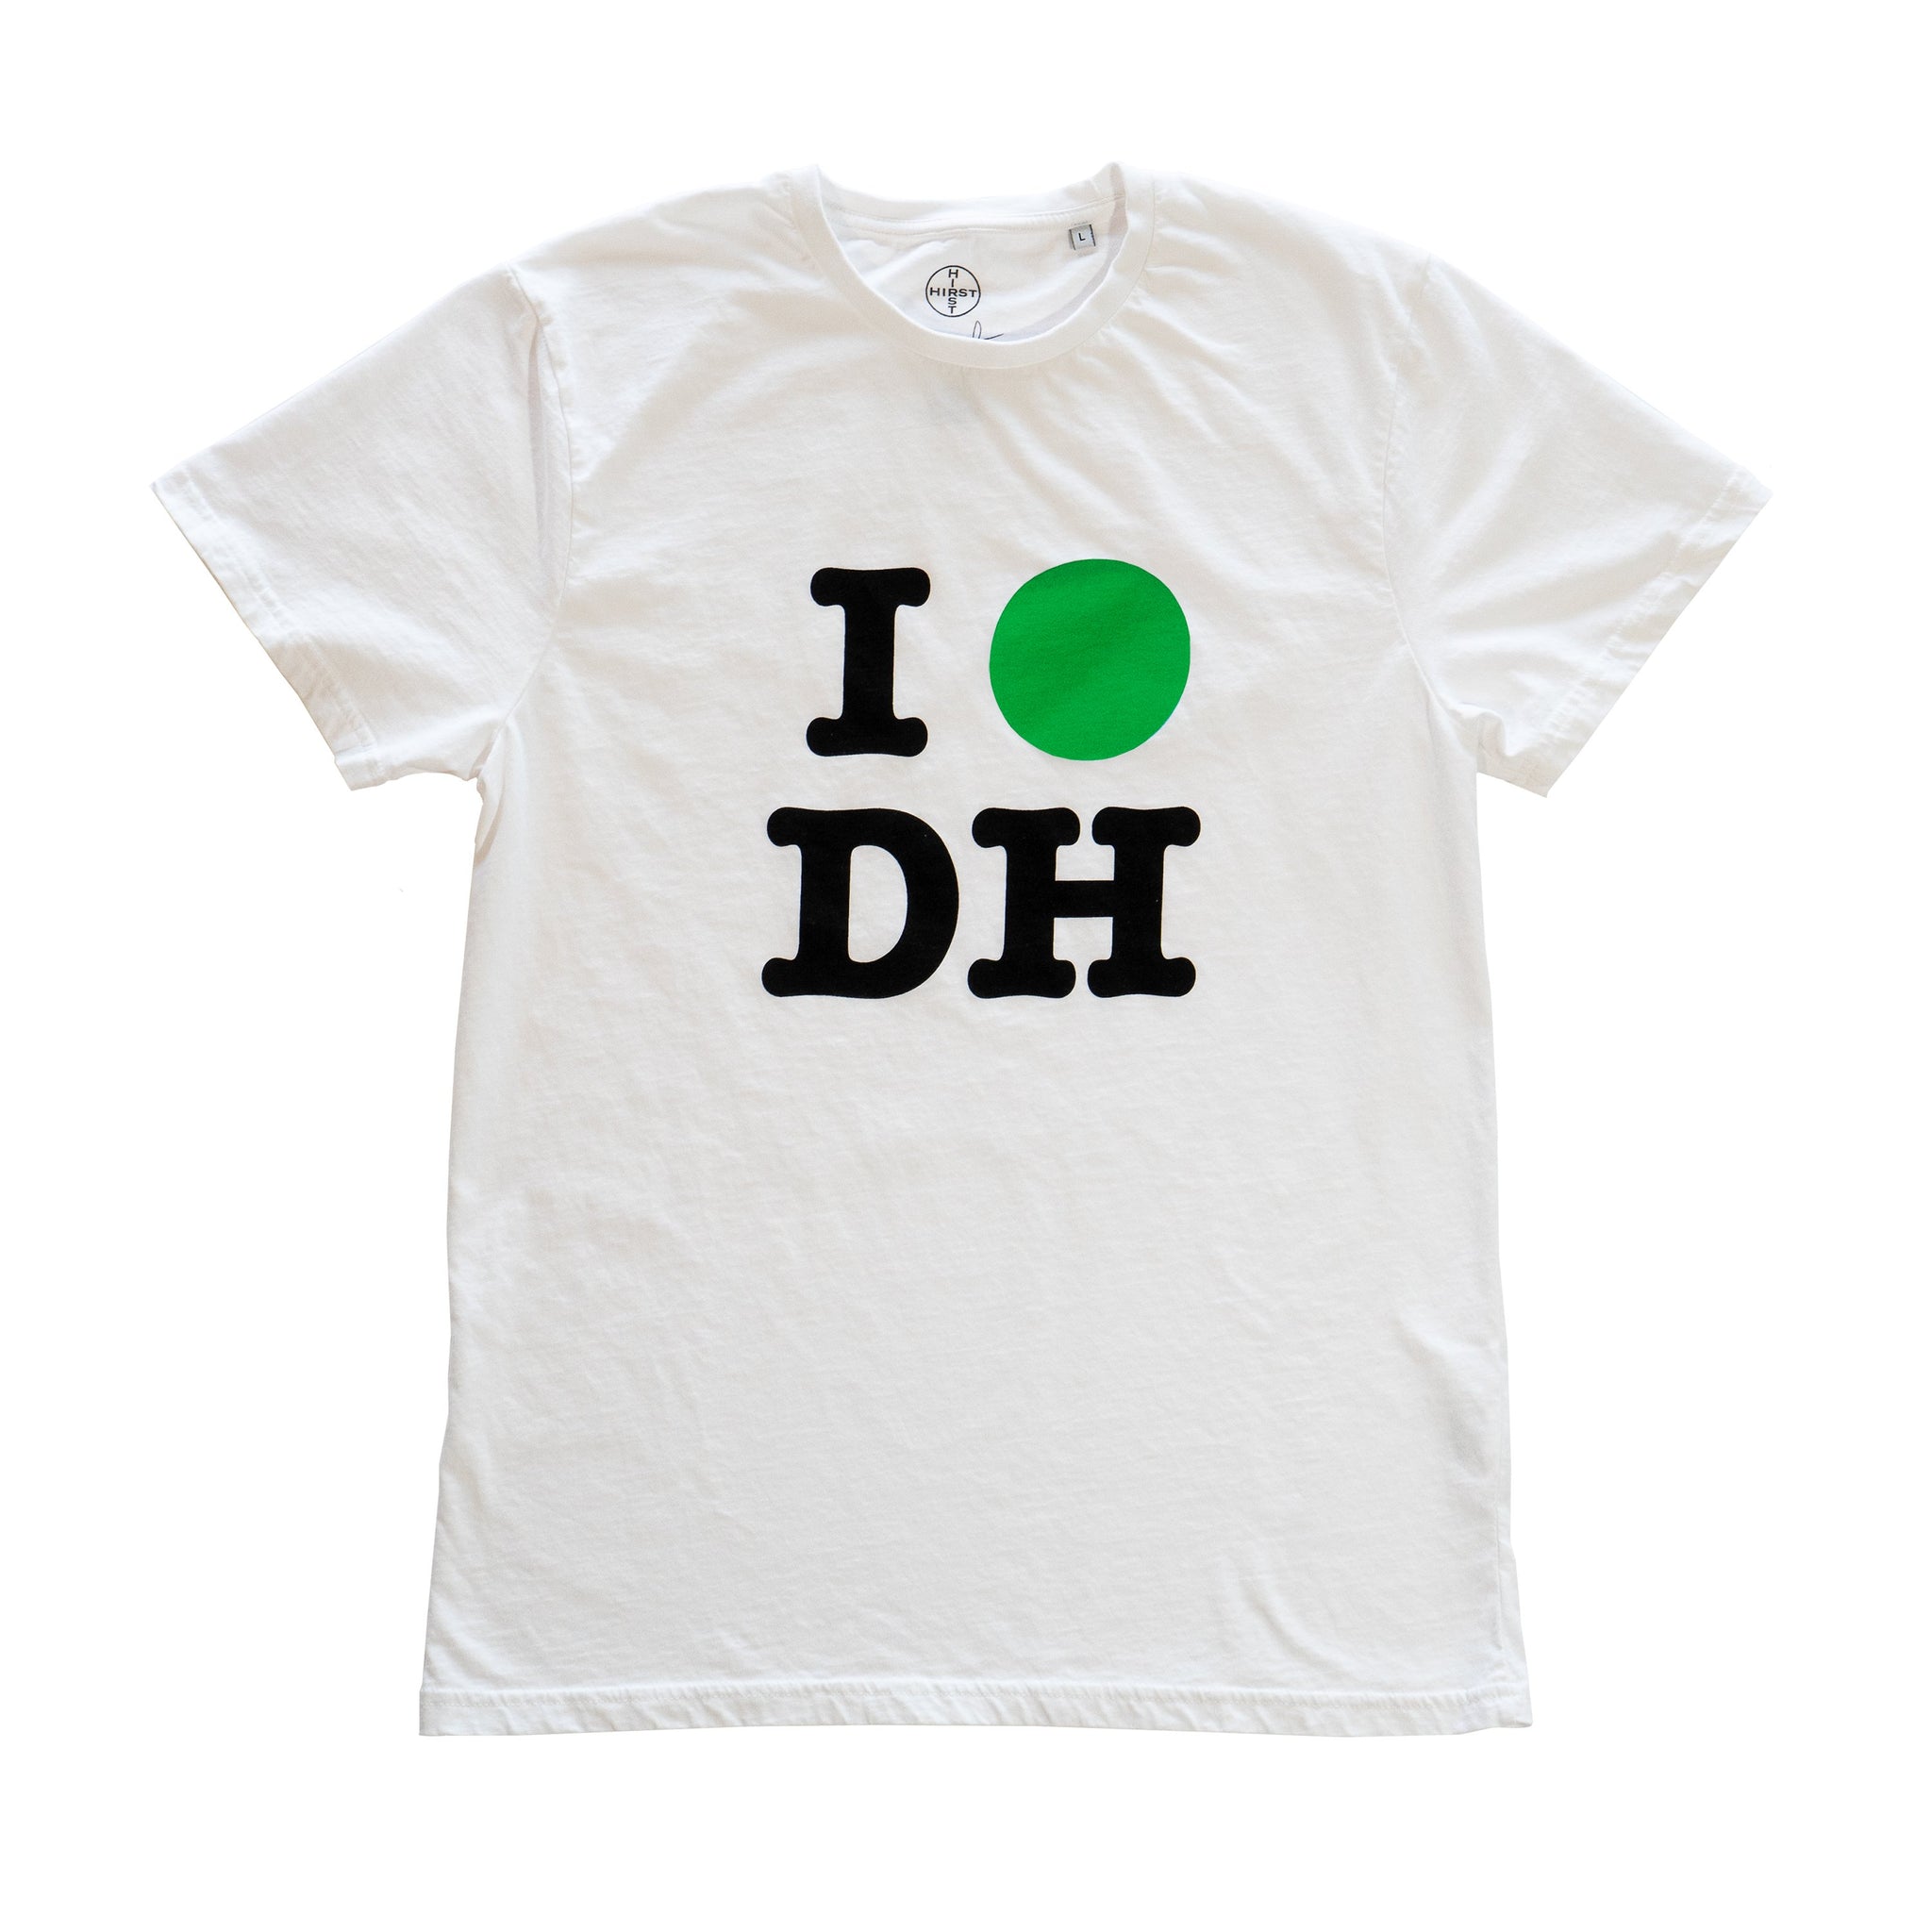 Damien Hirst: I “Spot” t-shirt in green